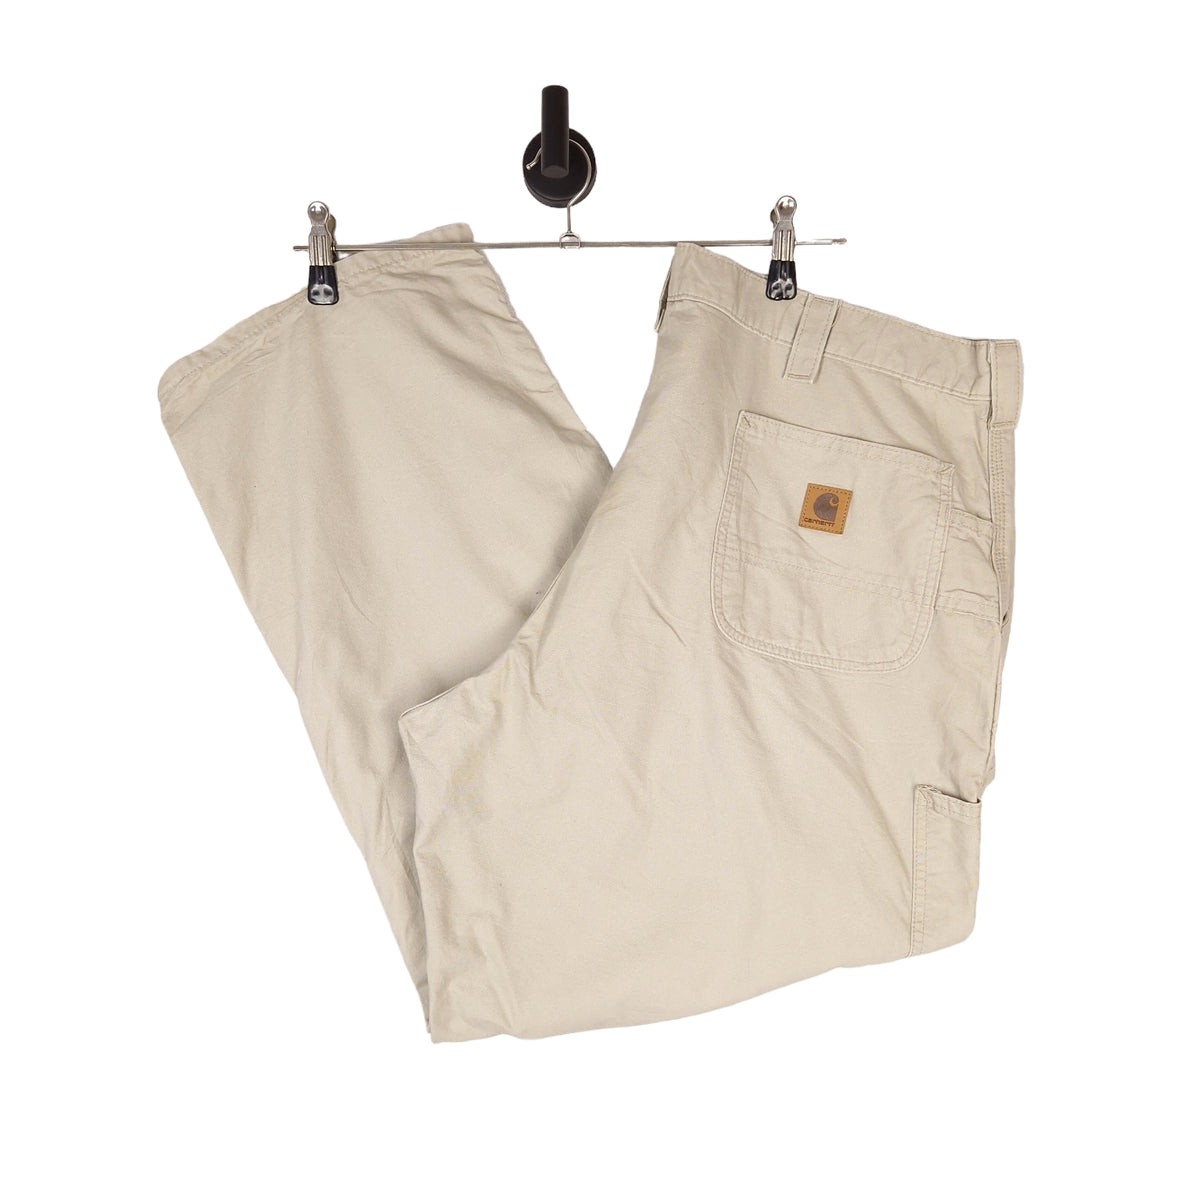 Carhartt Carpenter Trousers - Size W44 L30